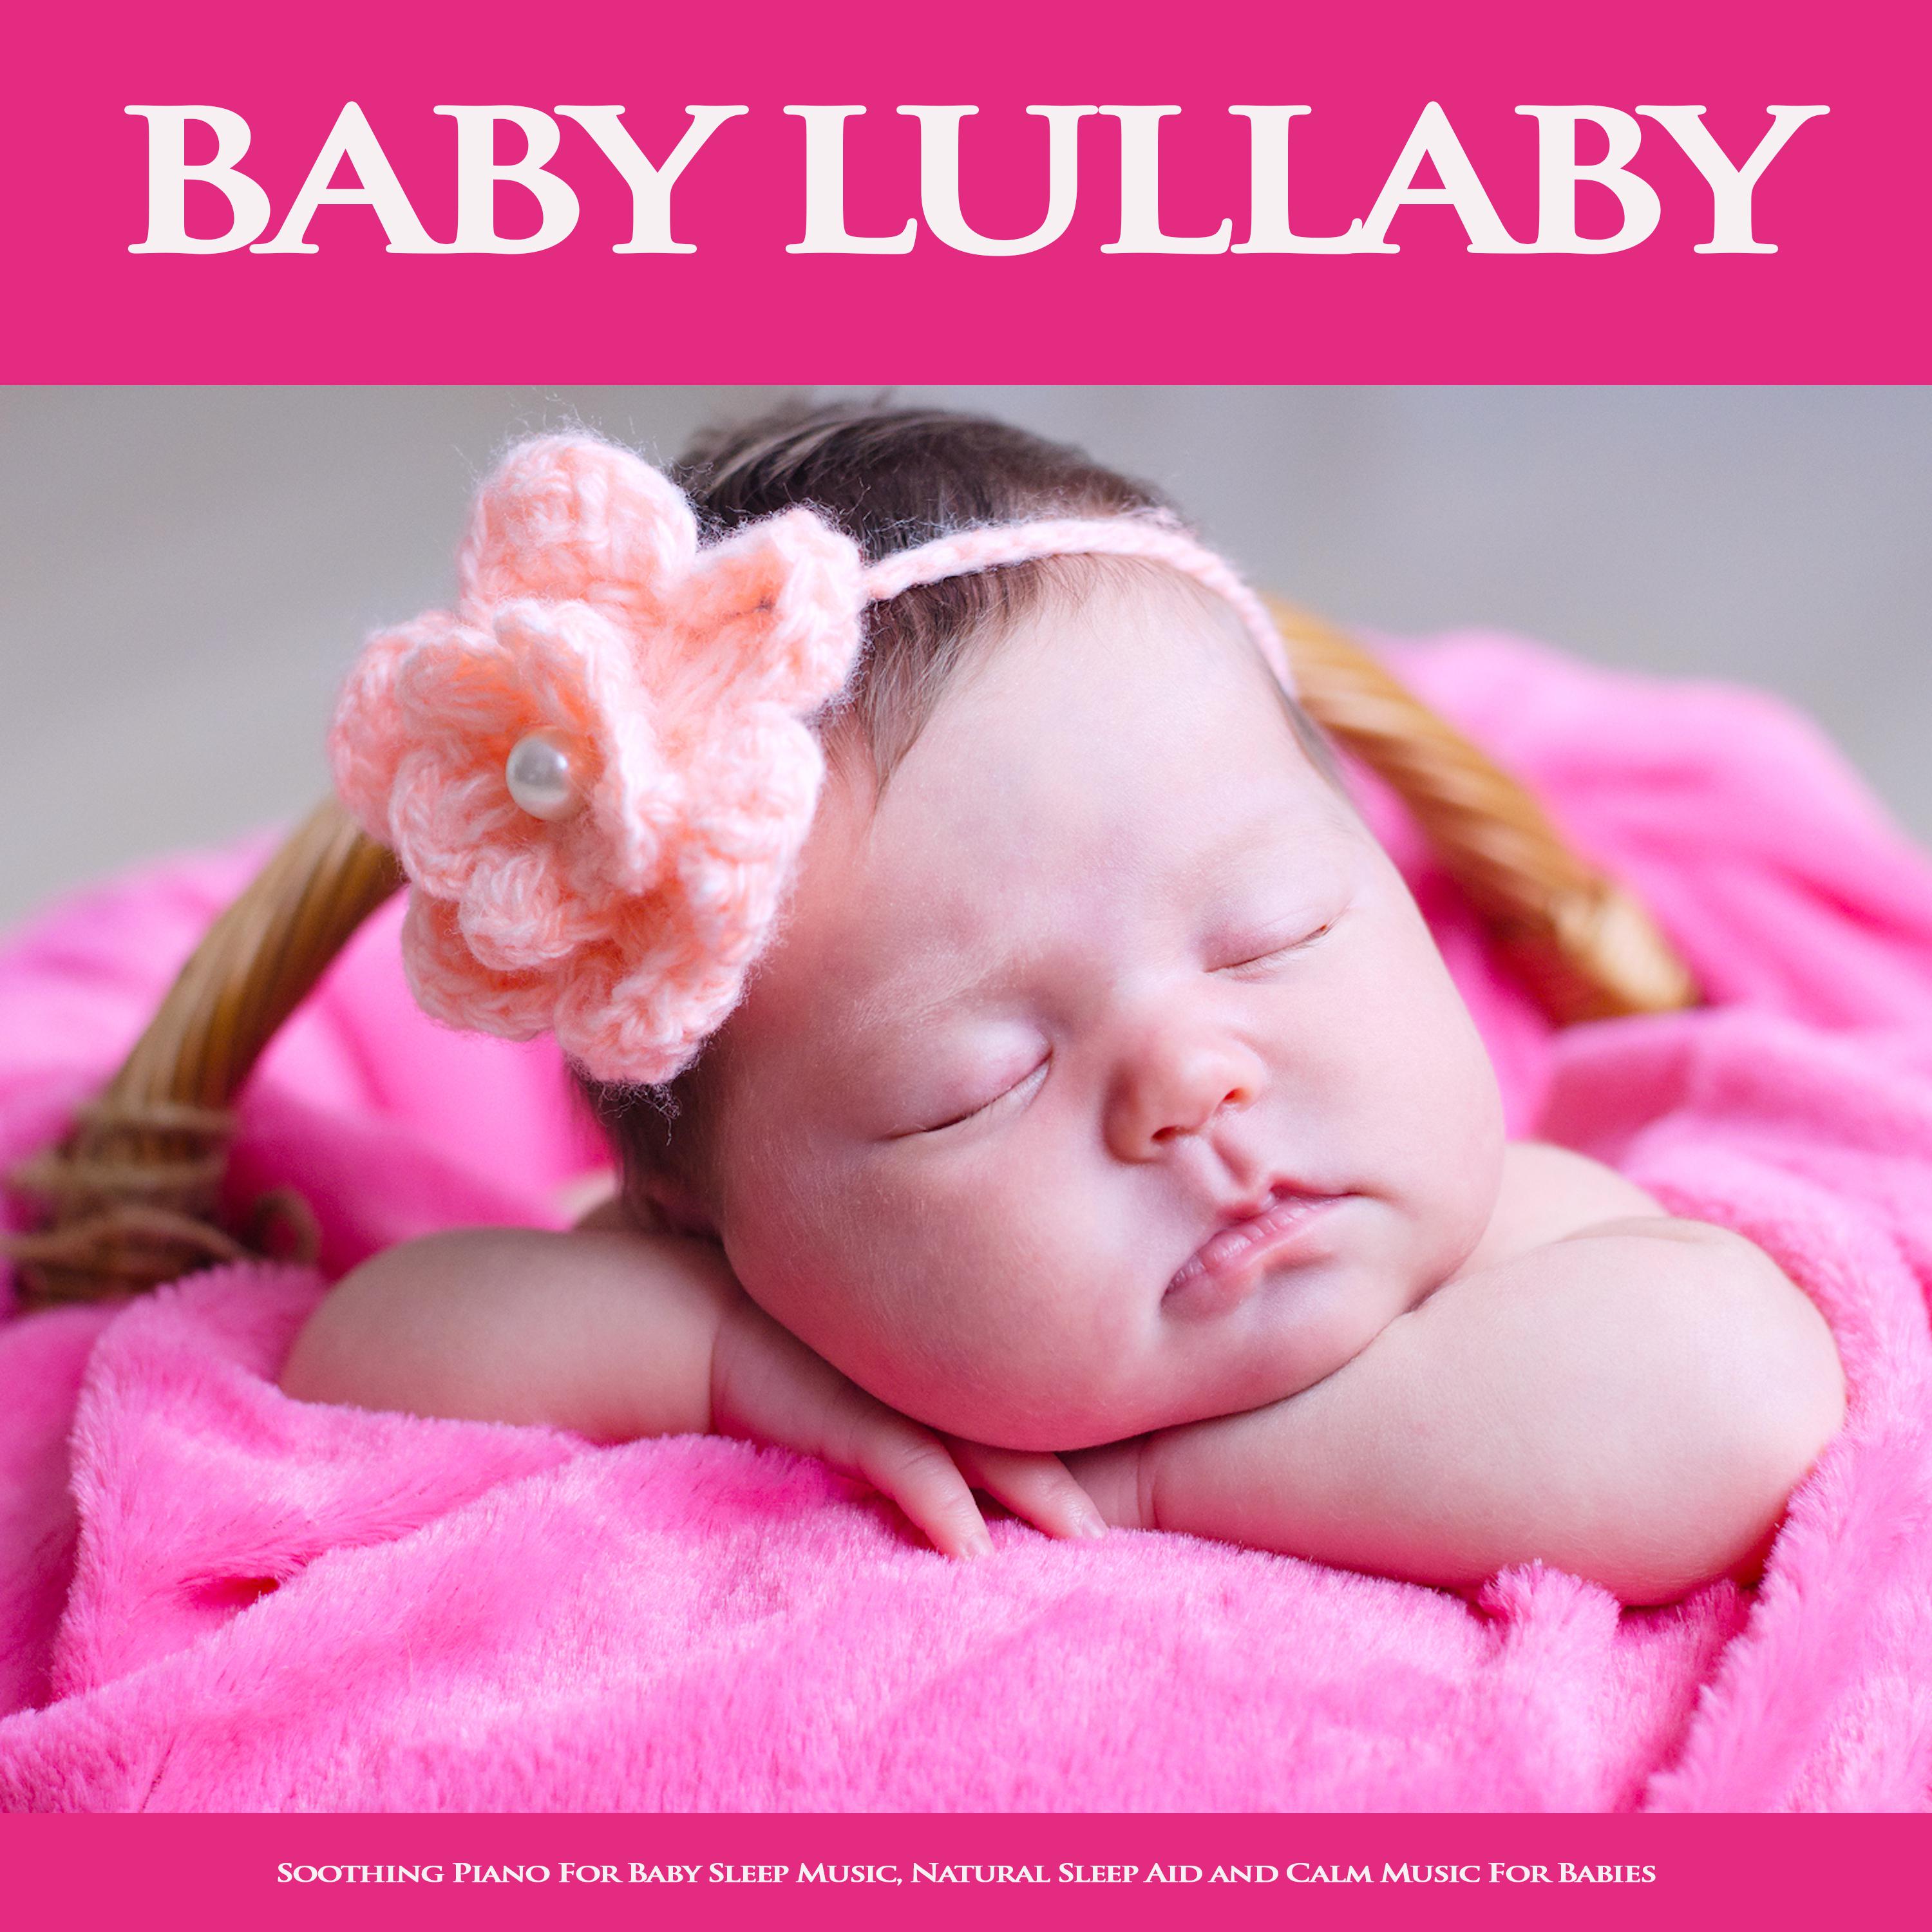 Baby Lullaby - Sleep Aid Piano Music